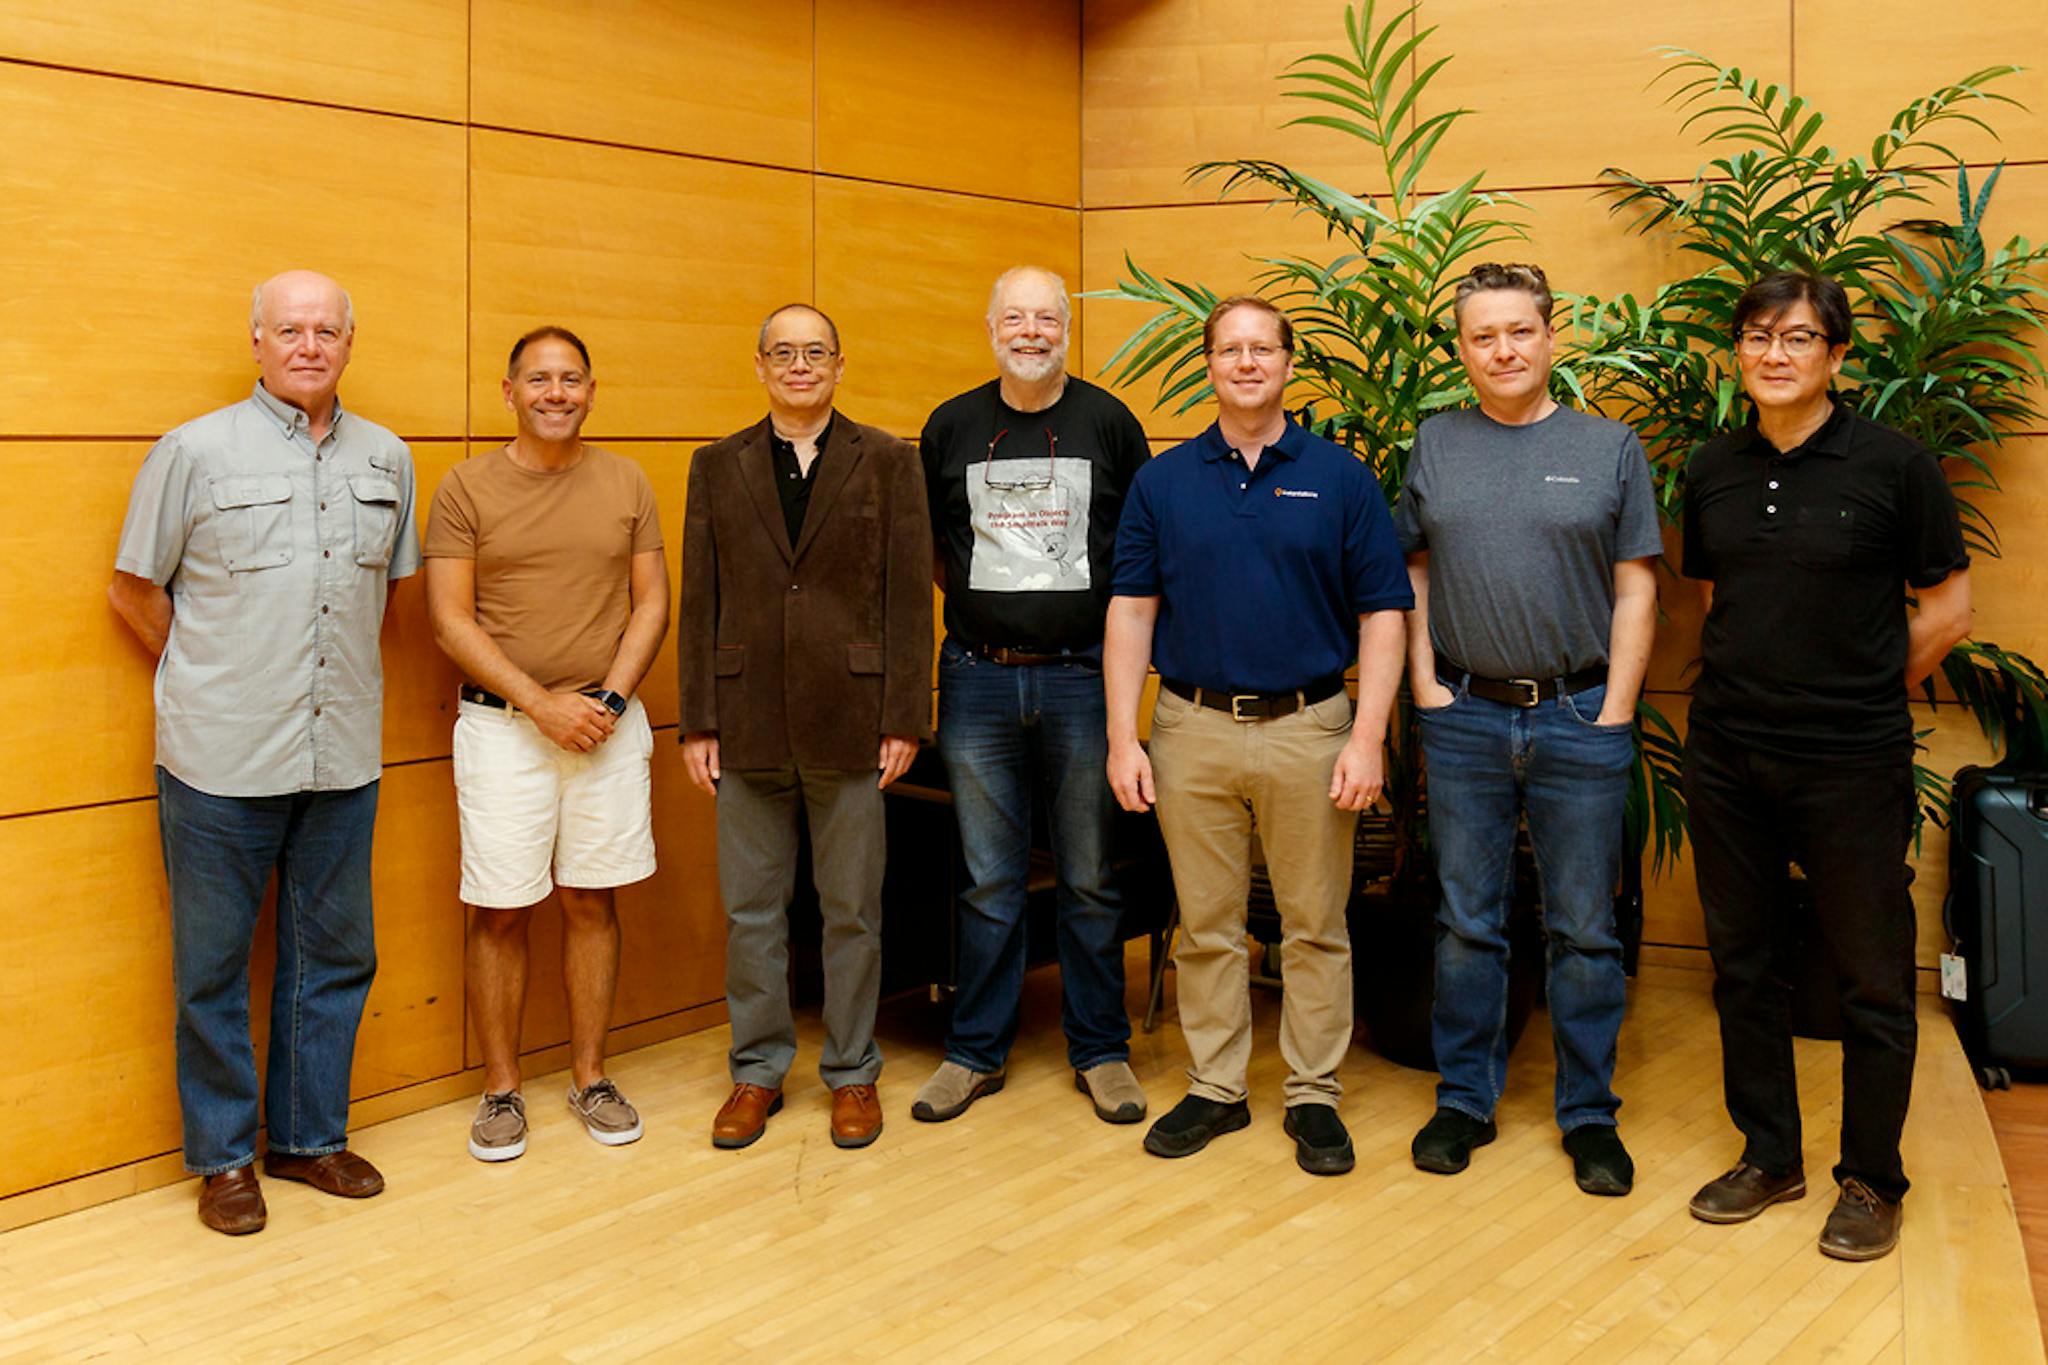 Left to right: Vance Kershner, Mark Gonzalez, Richard Eng, Dave Mason, Seth Berman, Norm Green, Ki-Nam Choi